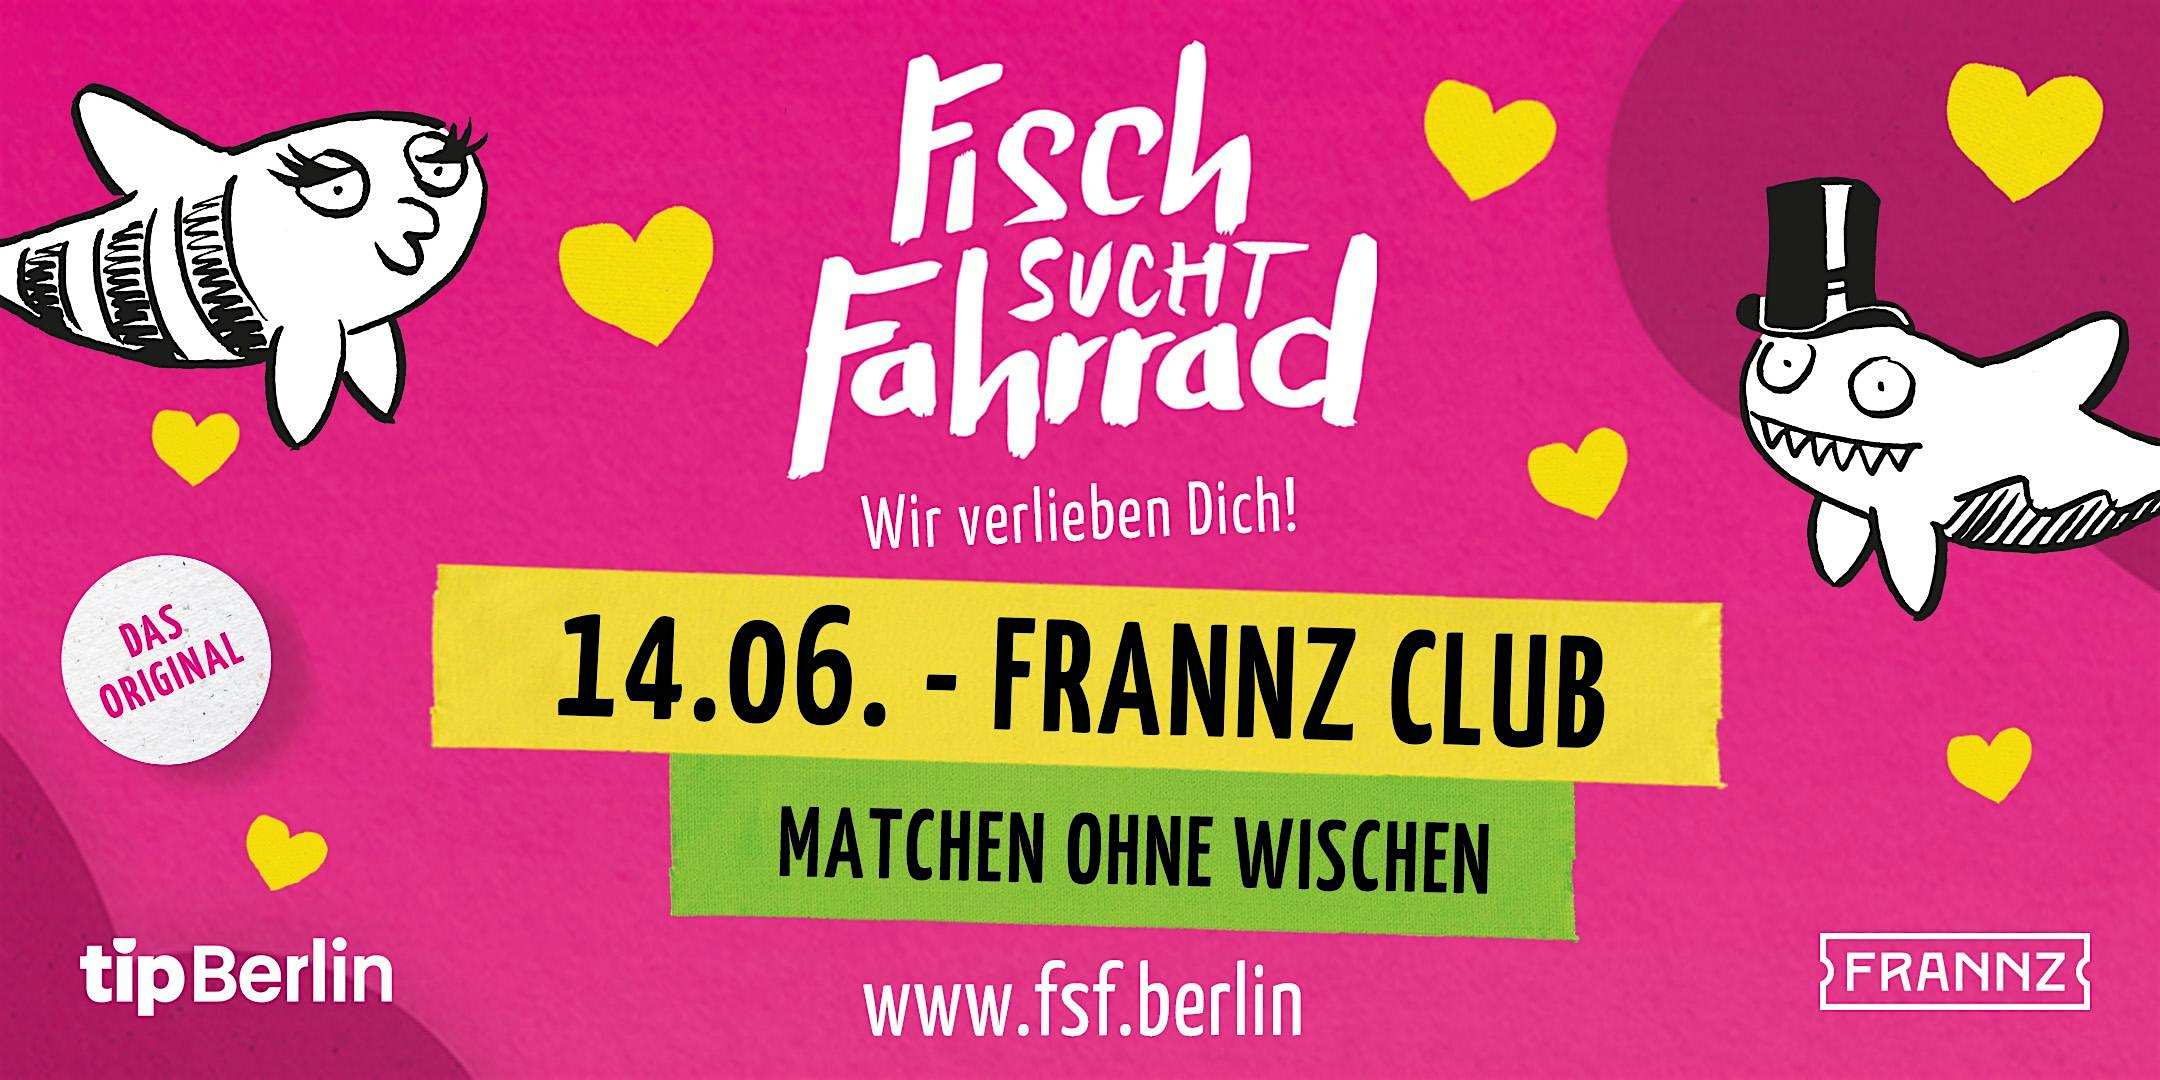 Fisch sucht Fahrrad Berlin | Single Party | 14.06.24